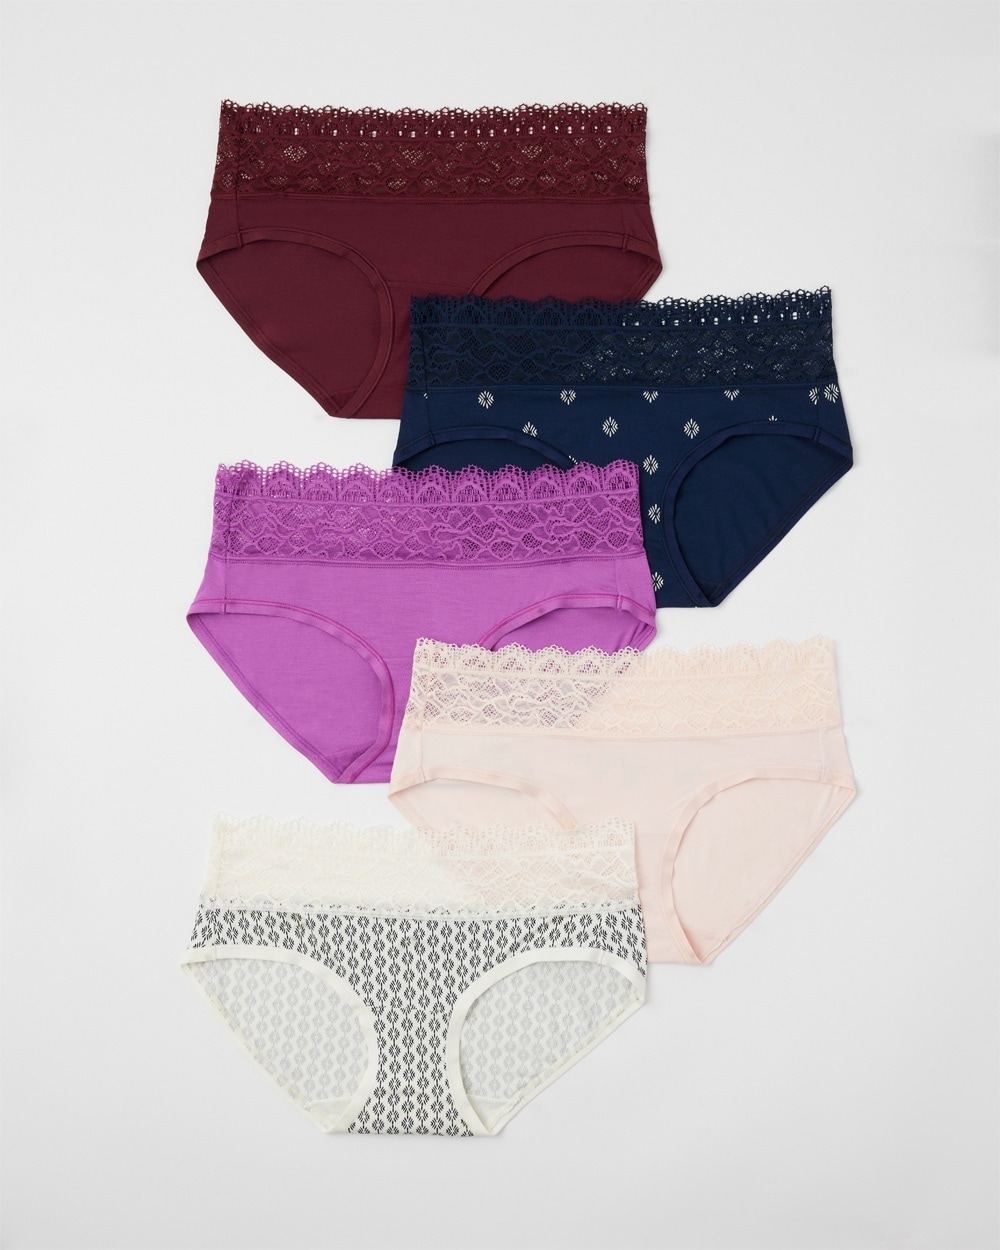 Soma: Panties 5 for $39